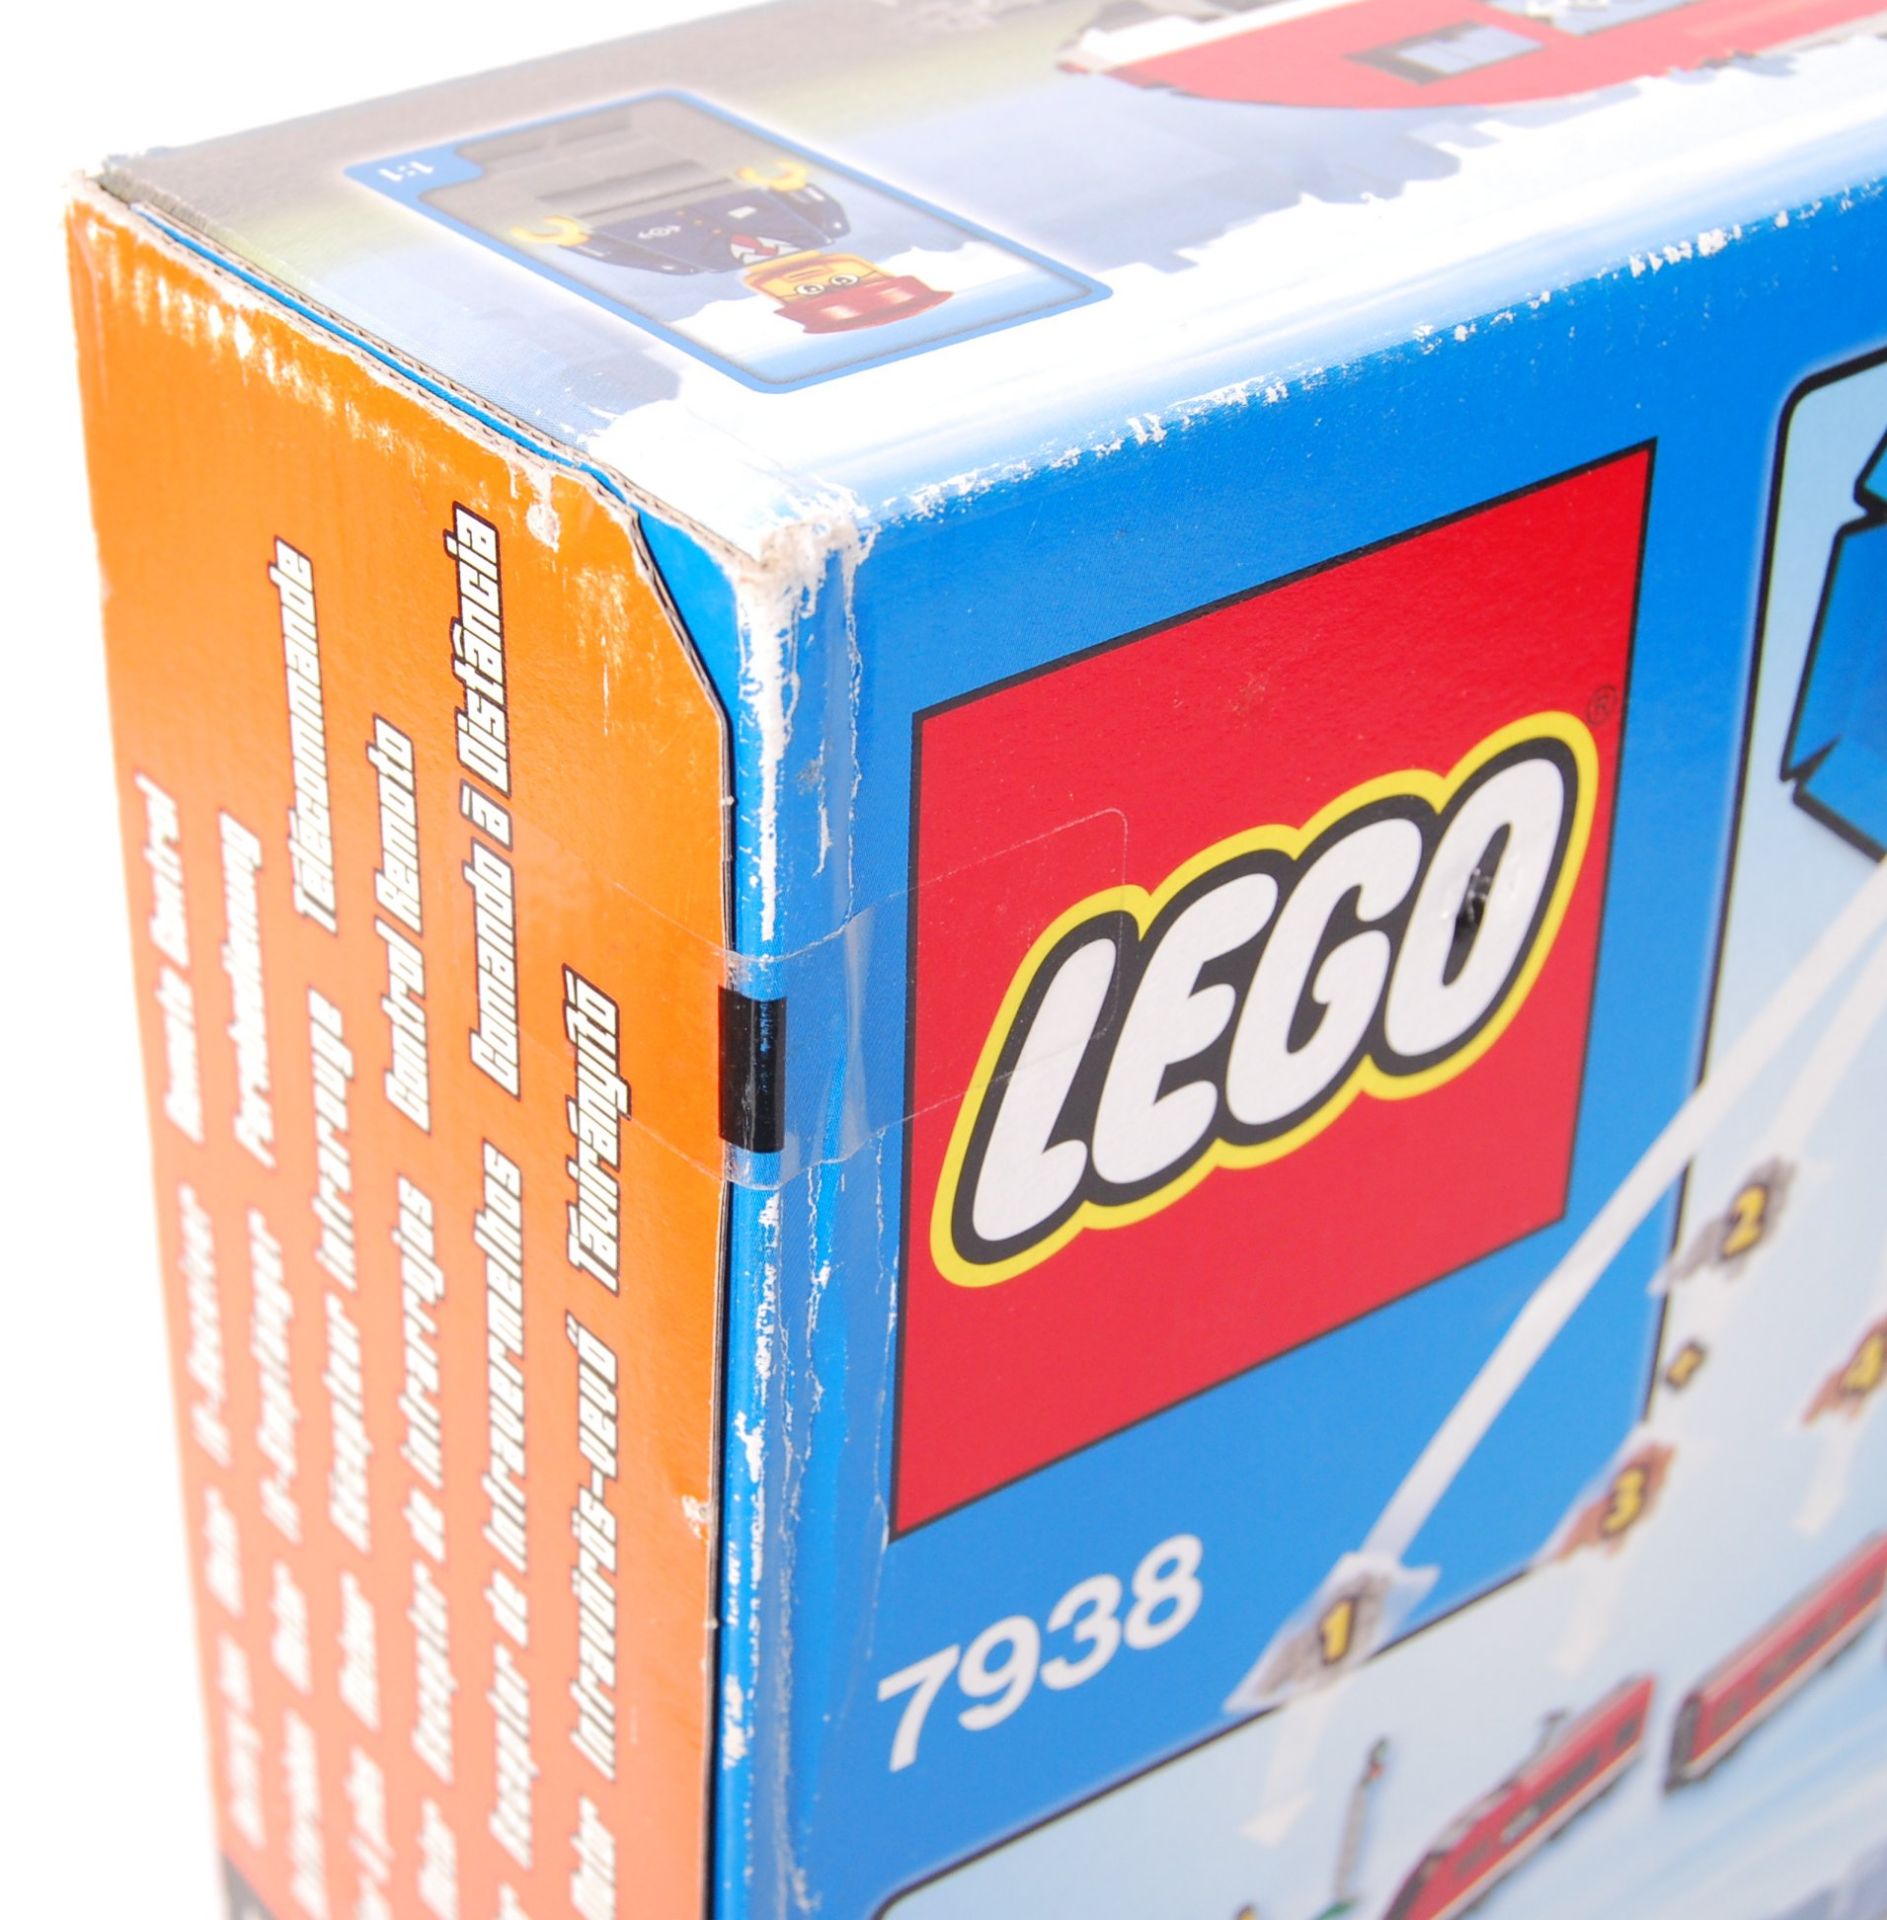 LEGO CITY 7938 ' PASSENGER TRAIN ' BOXED SET - Bild 3 aus 3